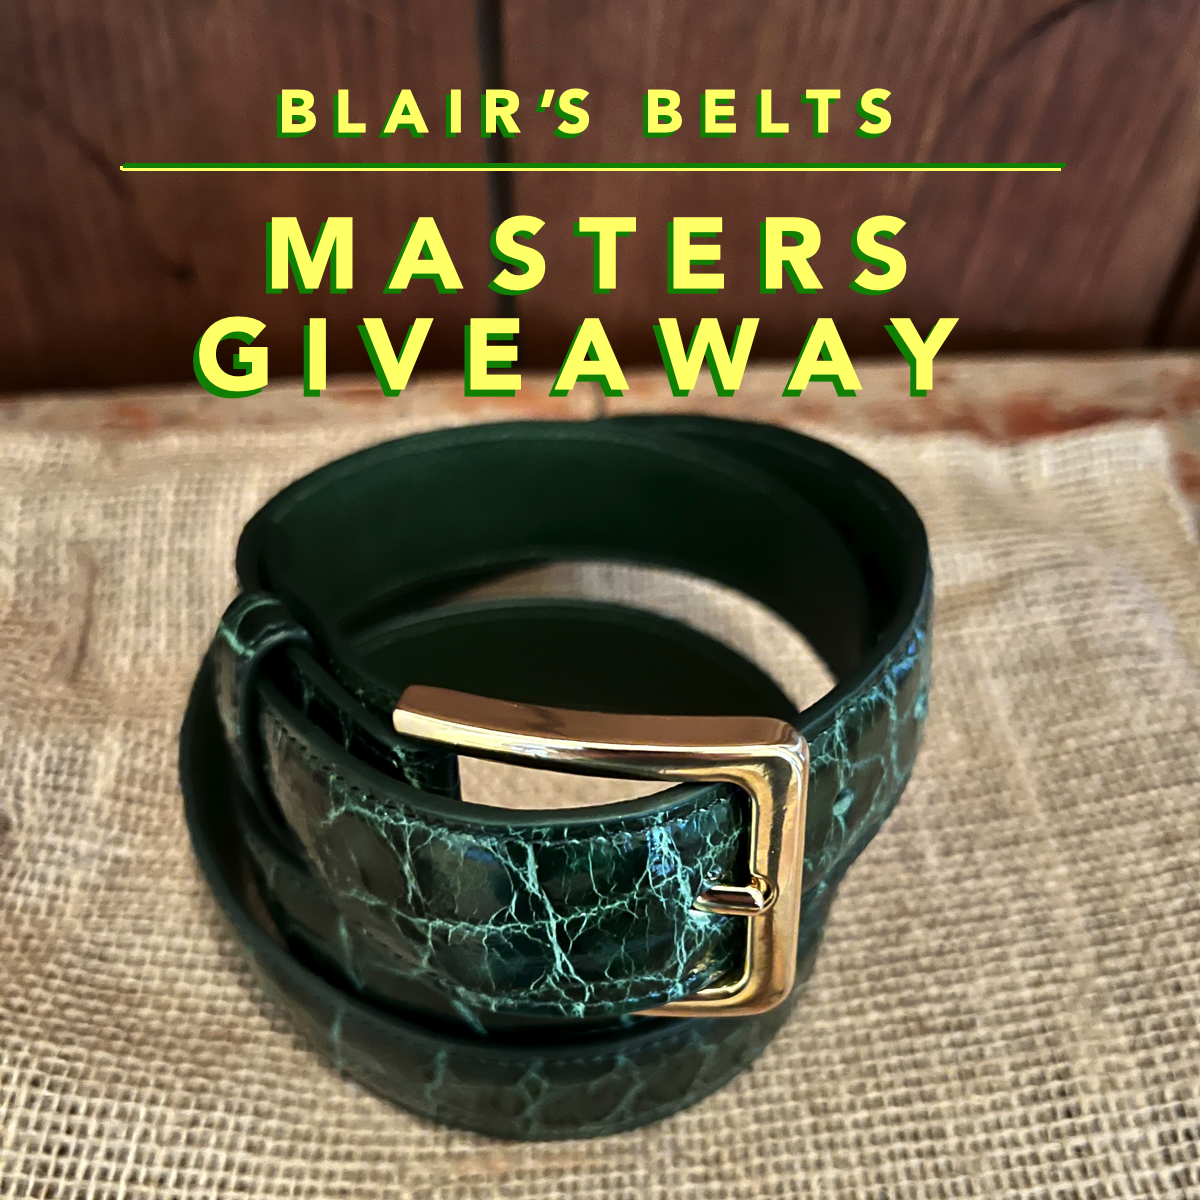 Masters Alligator Belt Giveaway with Blair’s Belts